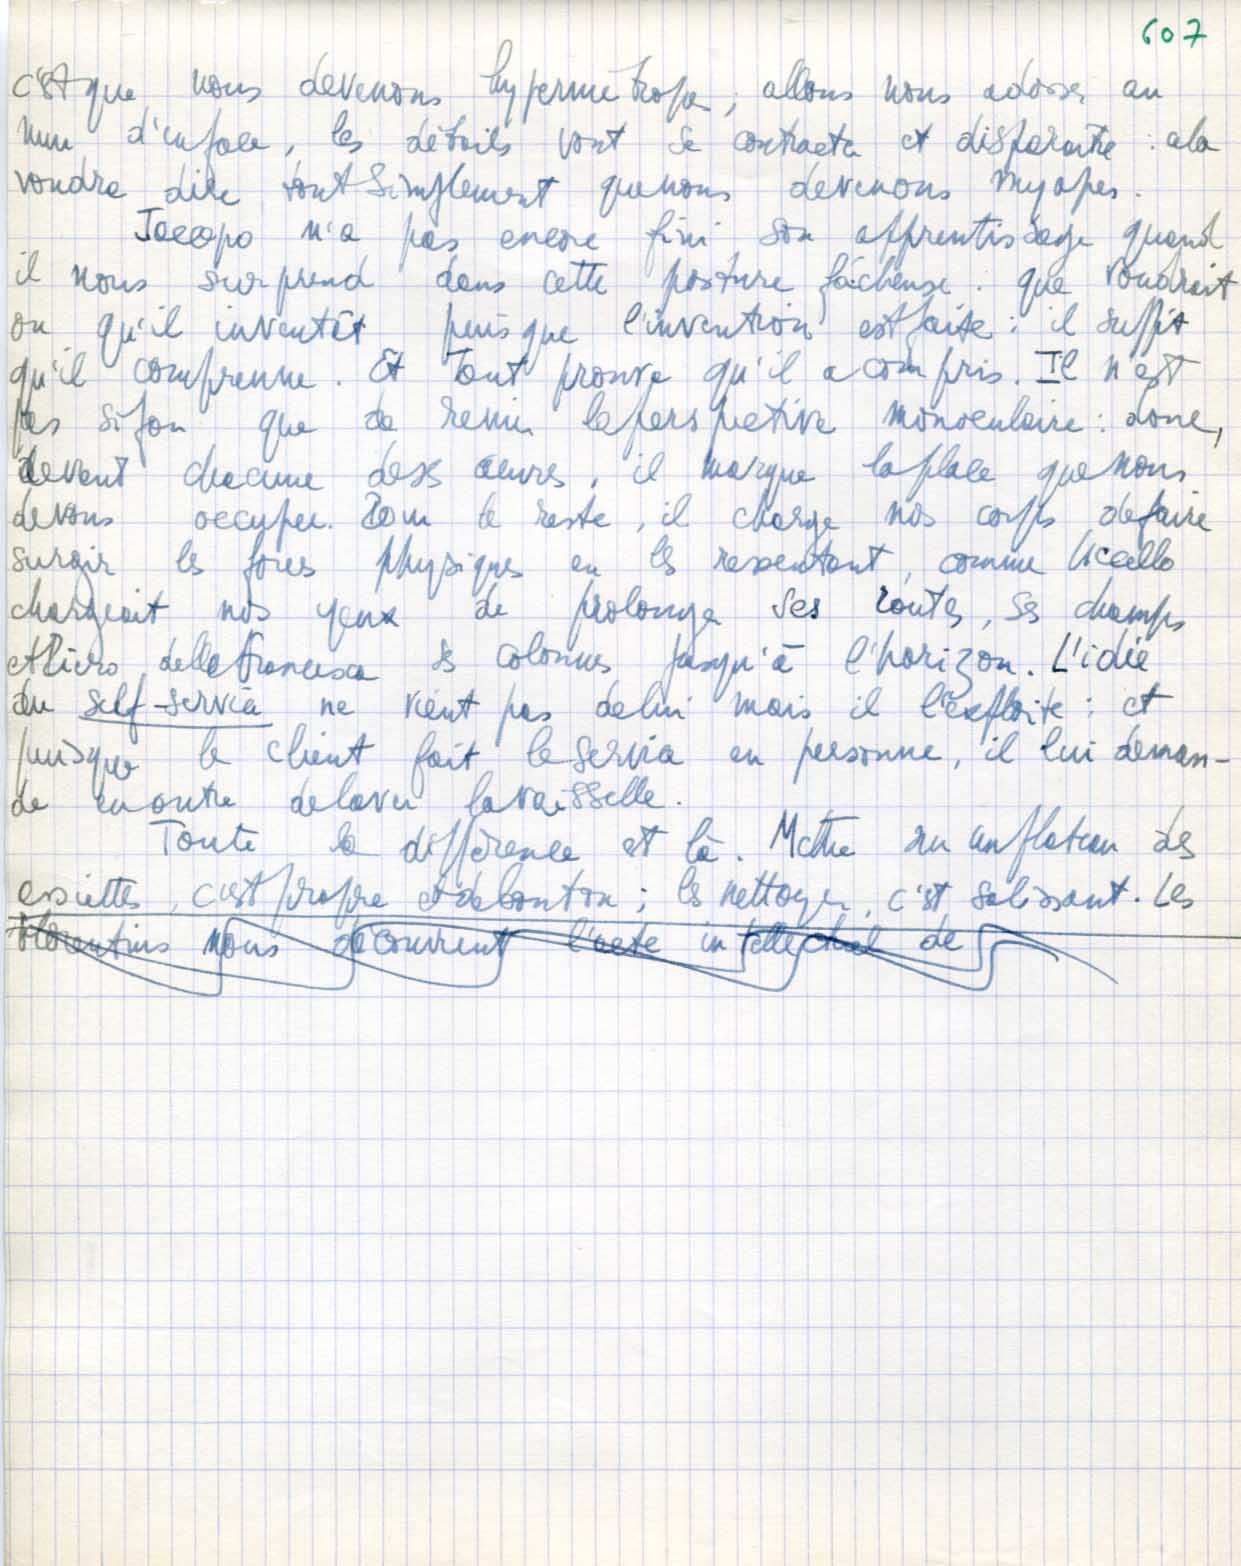 Jean-Paul Sartre 963 pages manuscript on Tintoretto